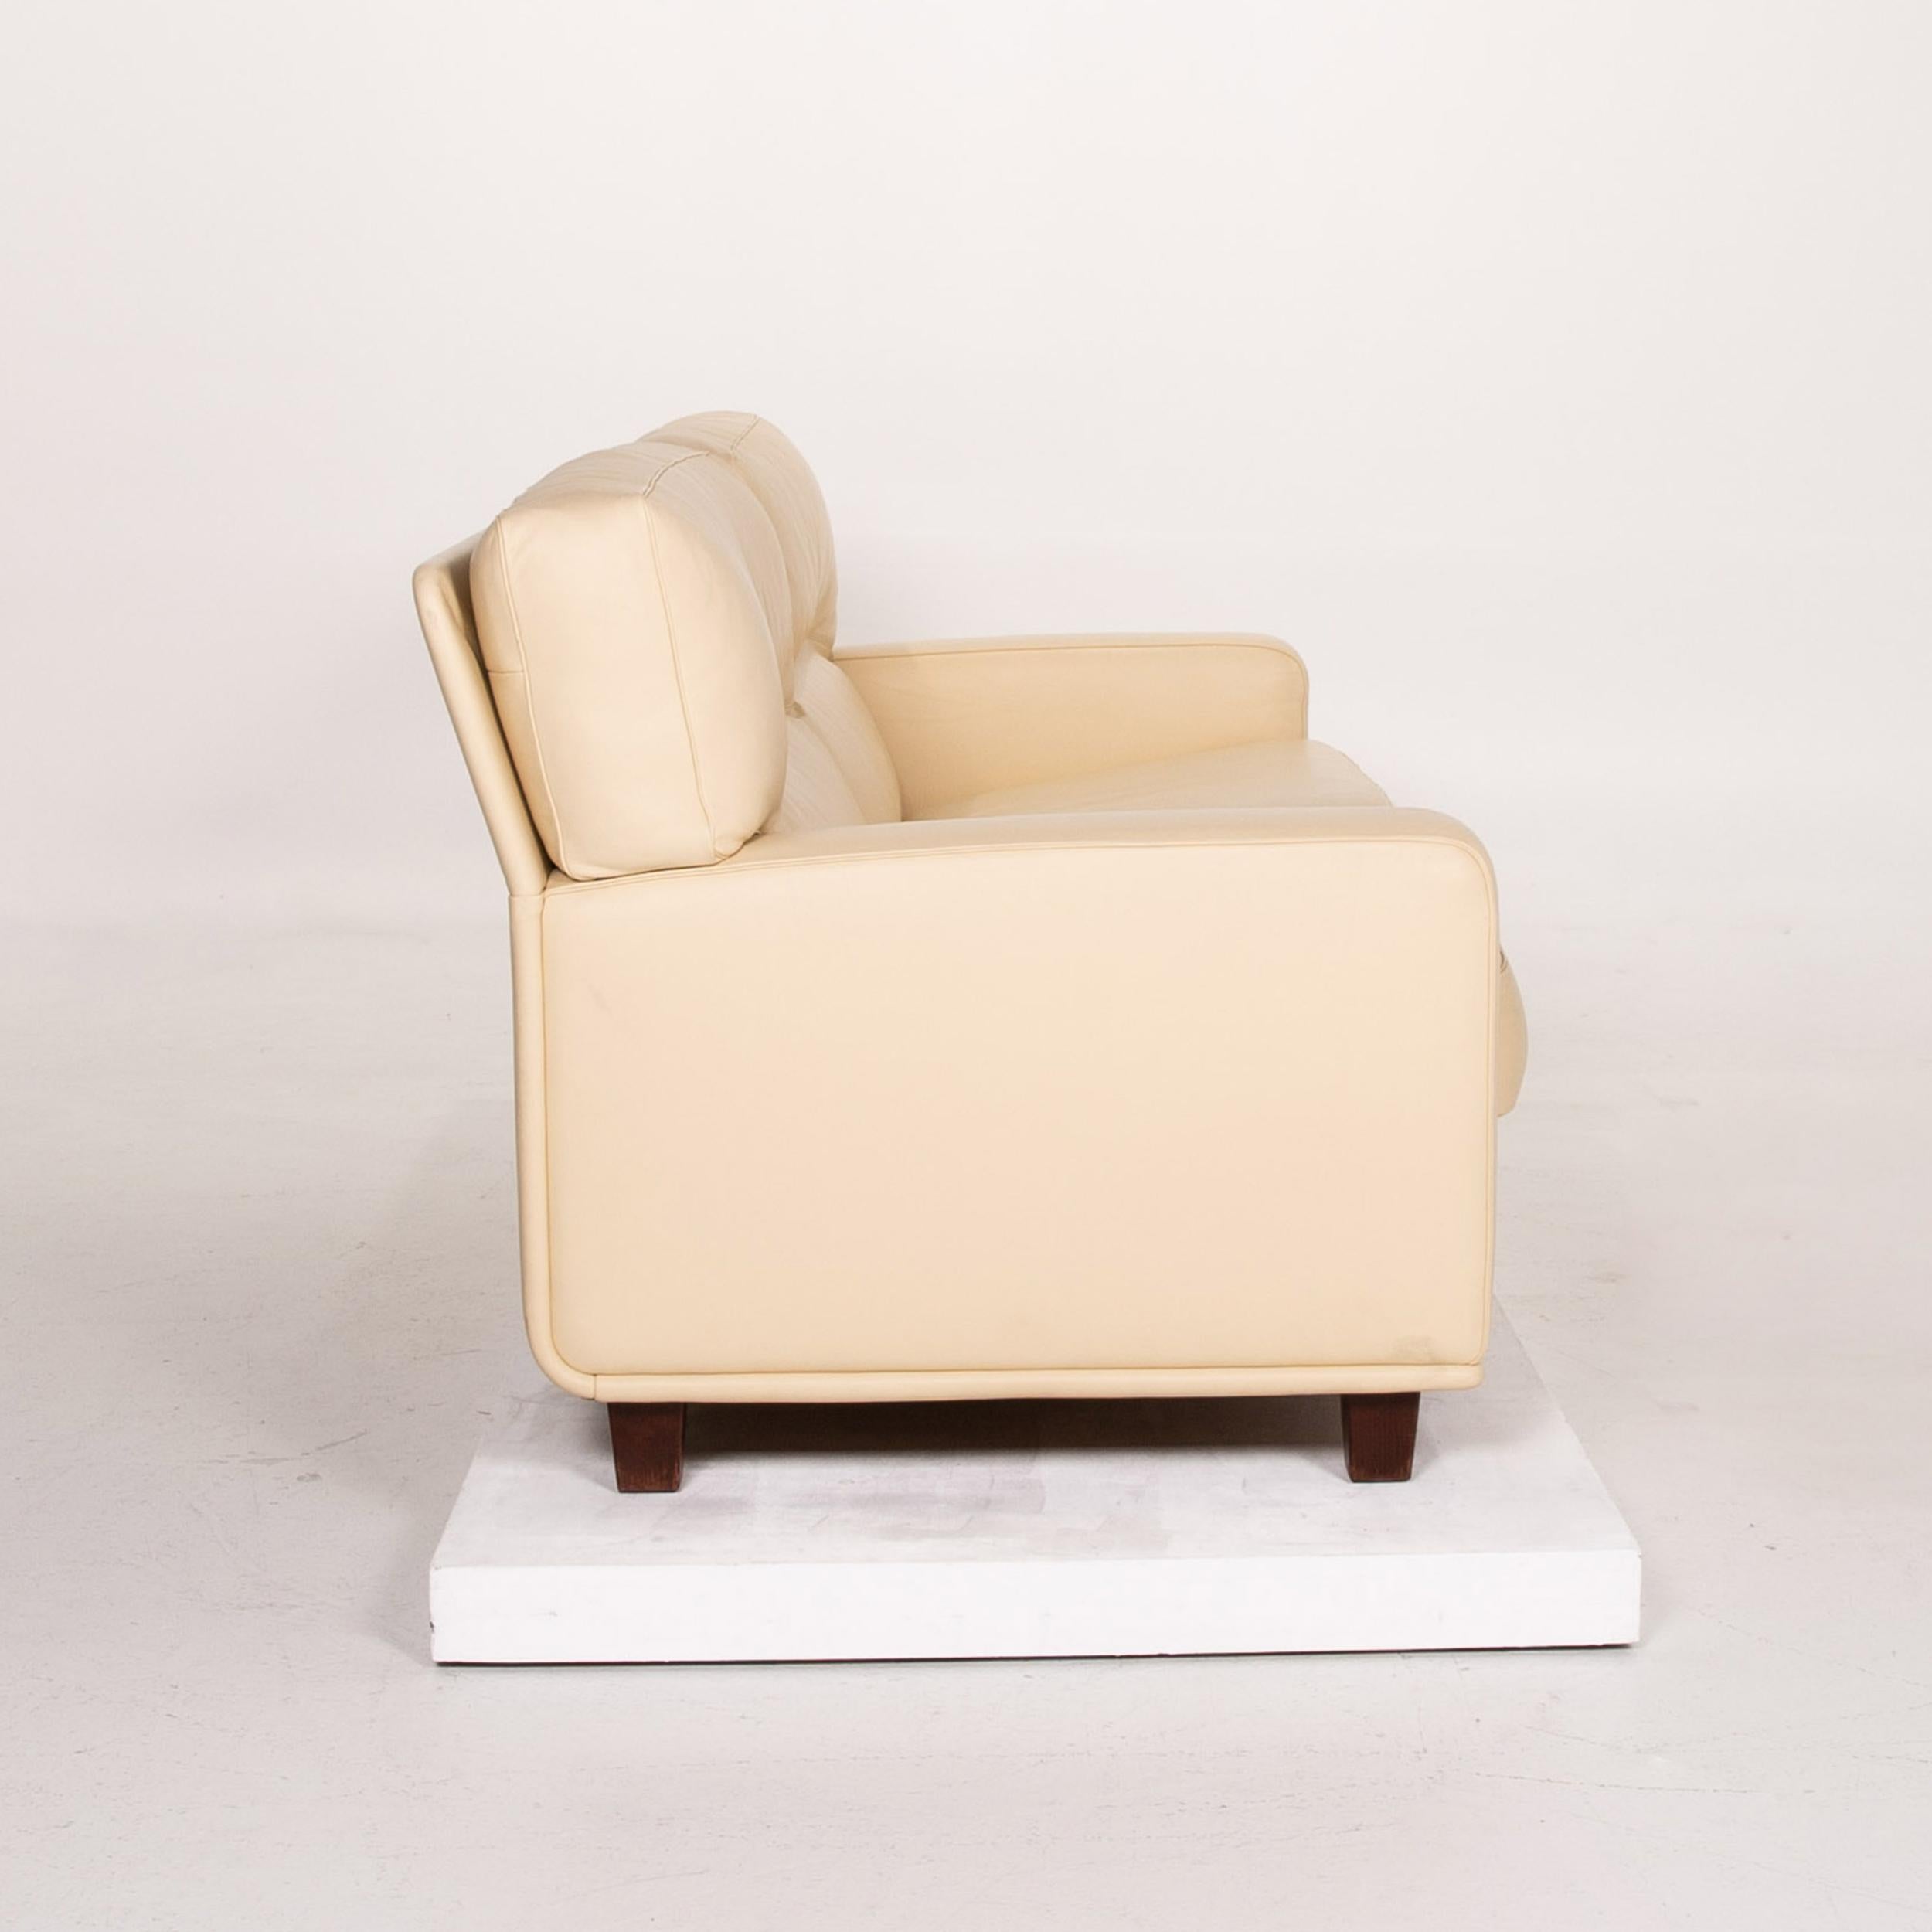 Poltrona Frau Leather Sofa Cream Two-Seat Couch 4